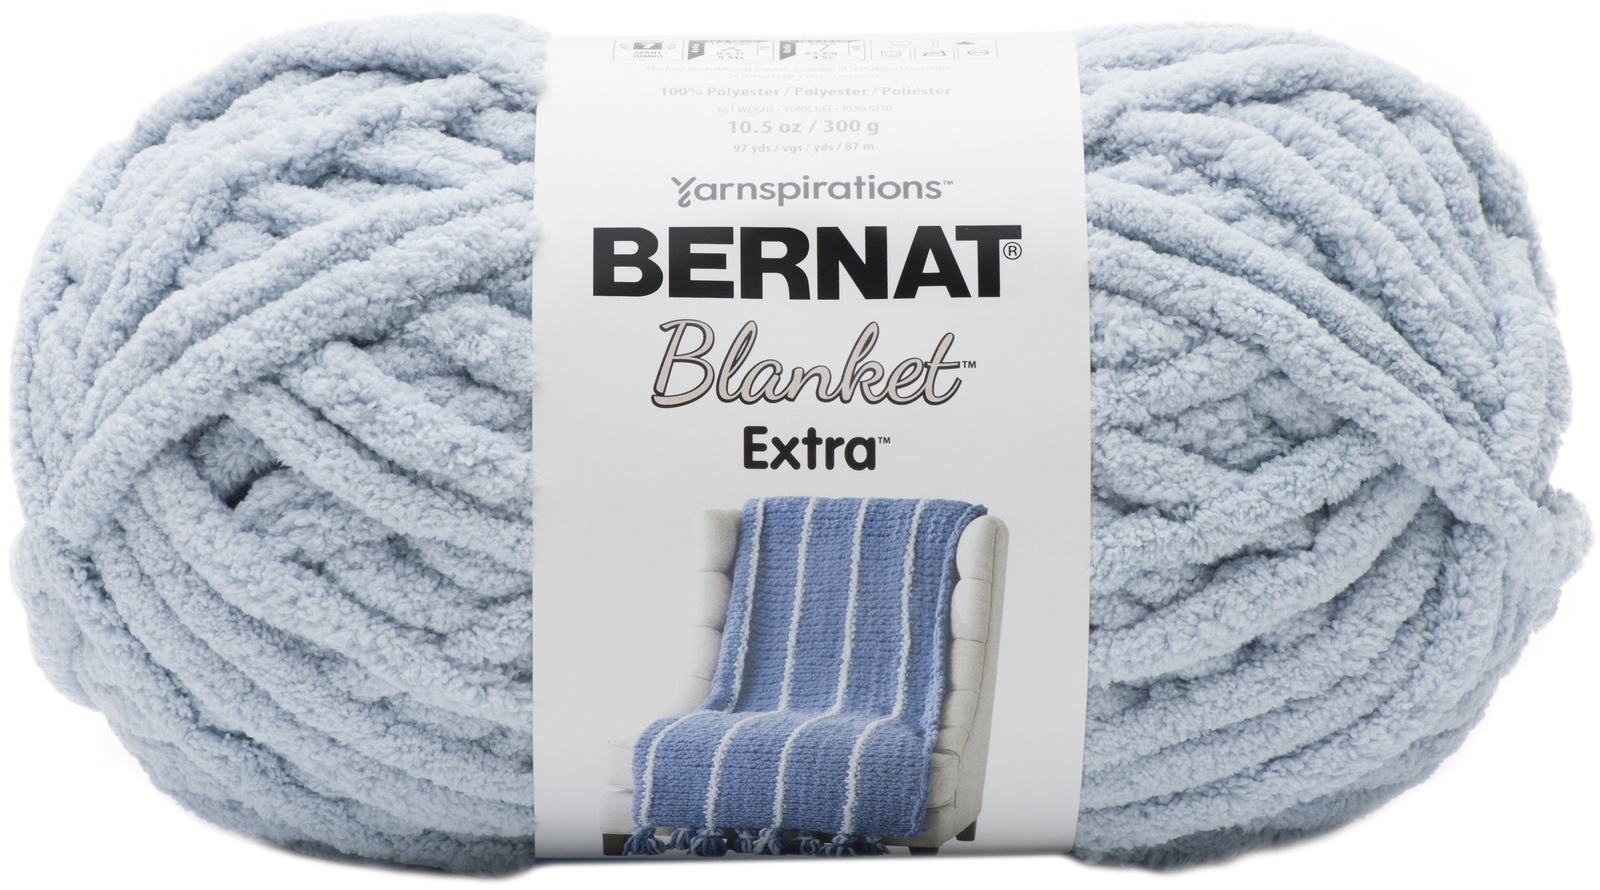 Bernat Blanket Big Ball Yarn, Almond